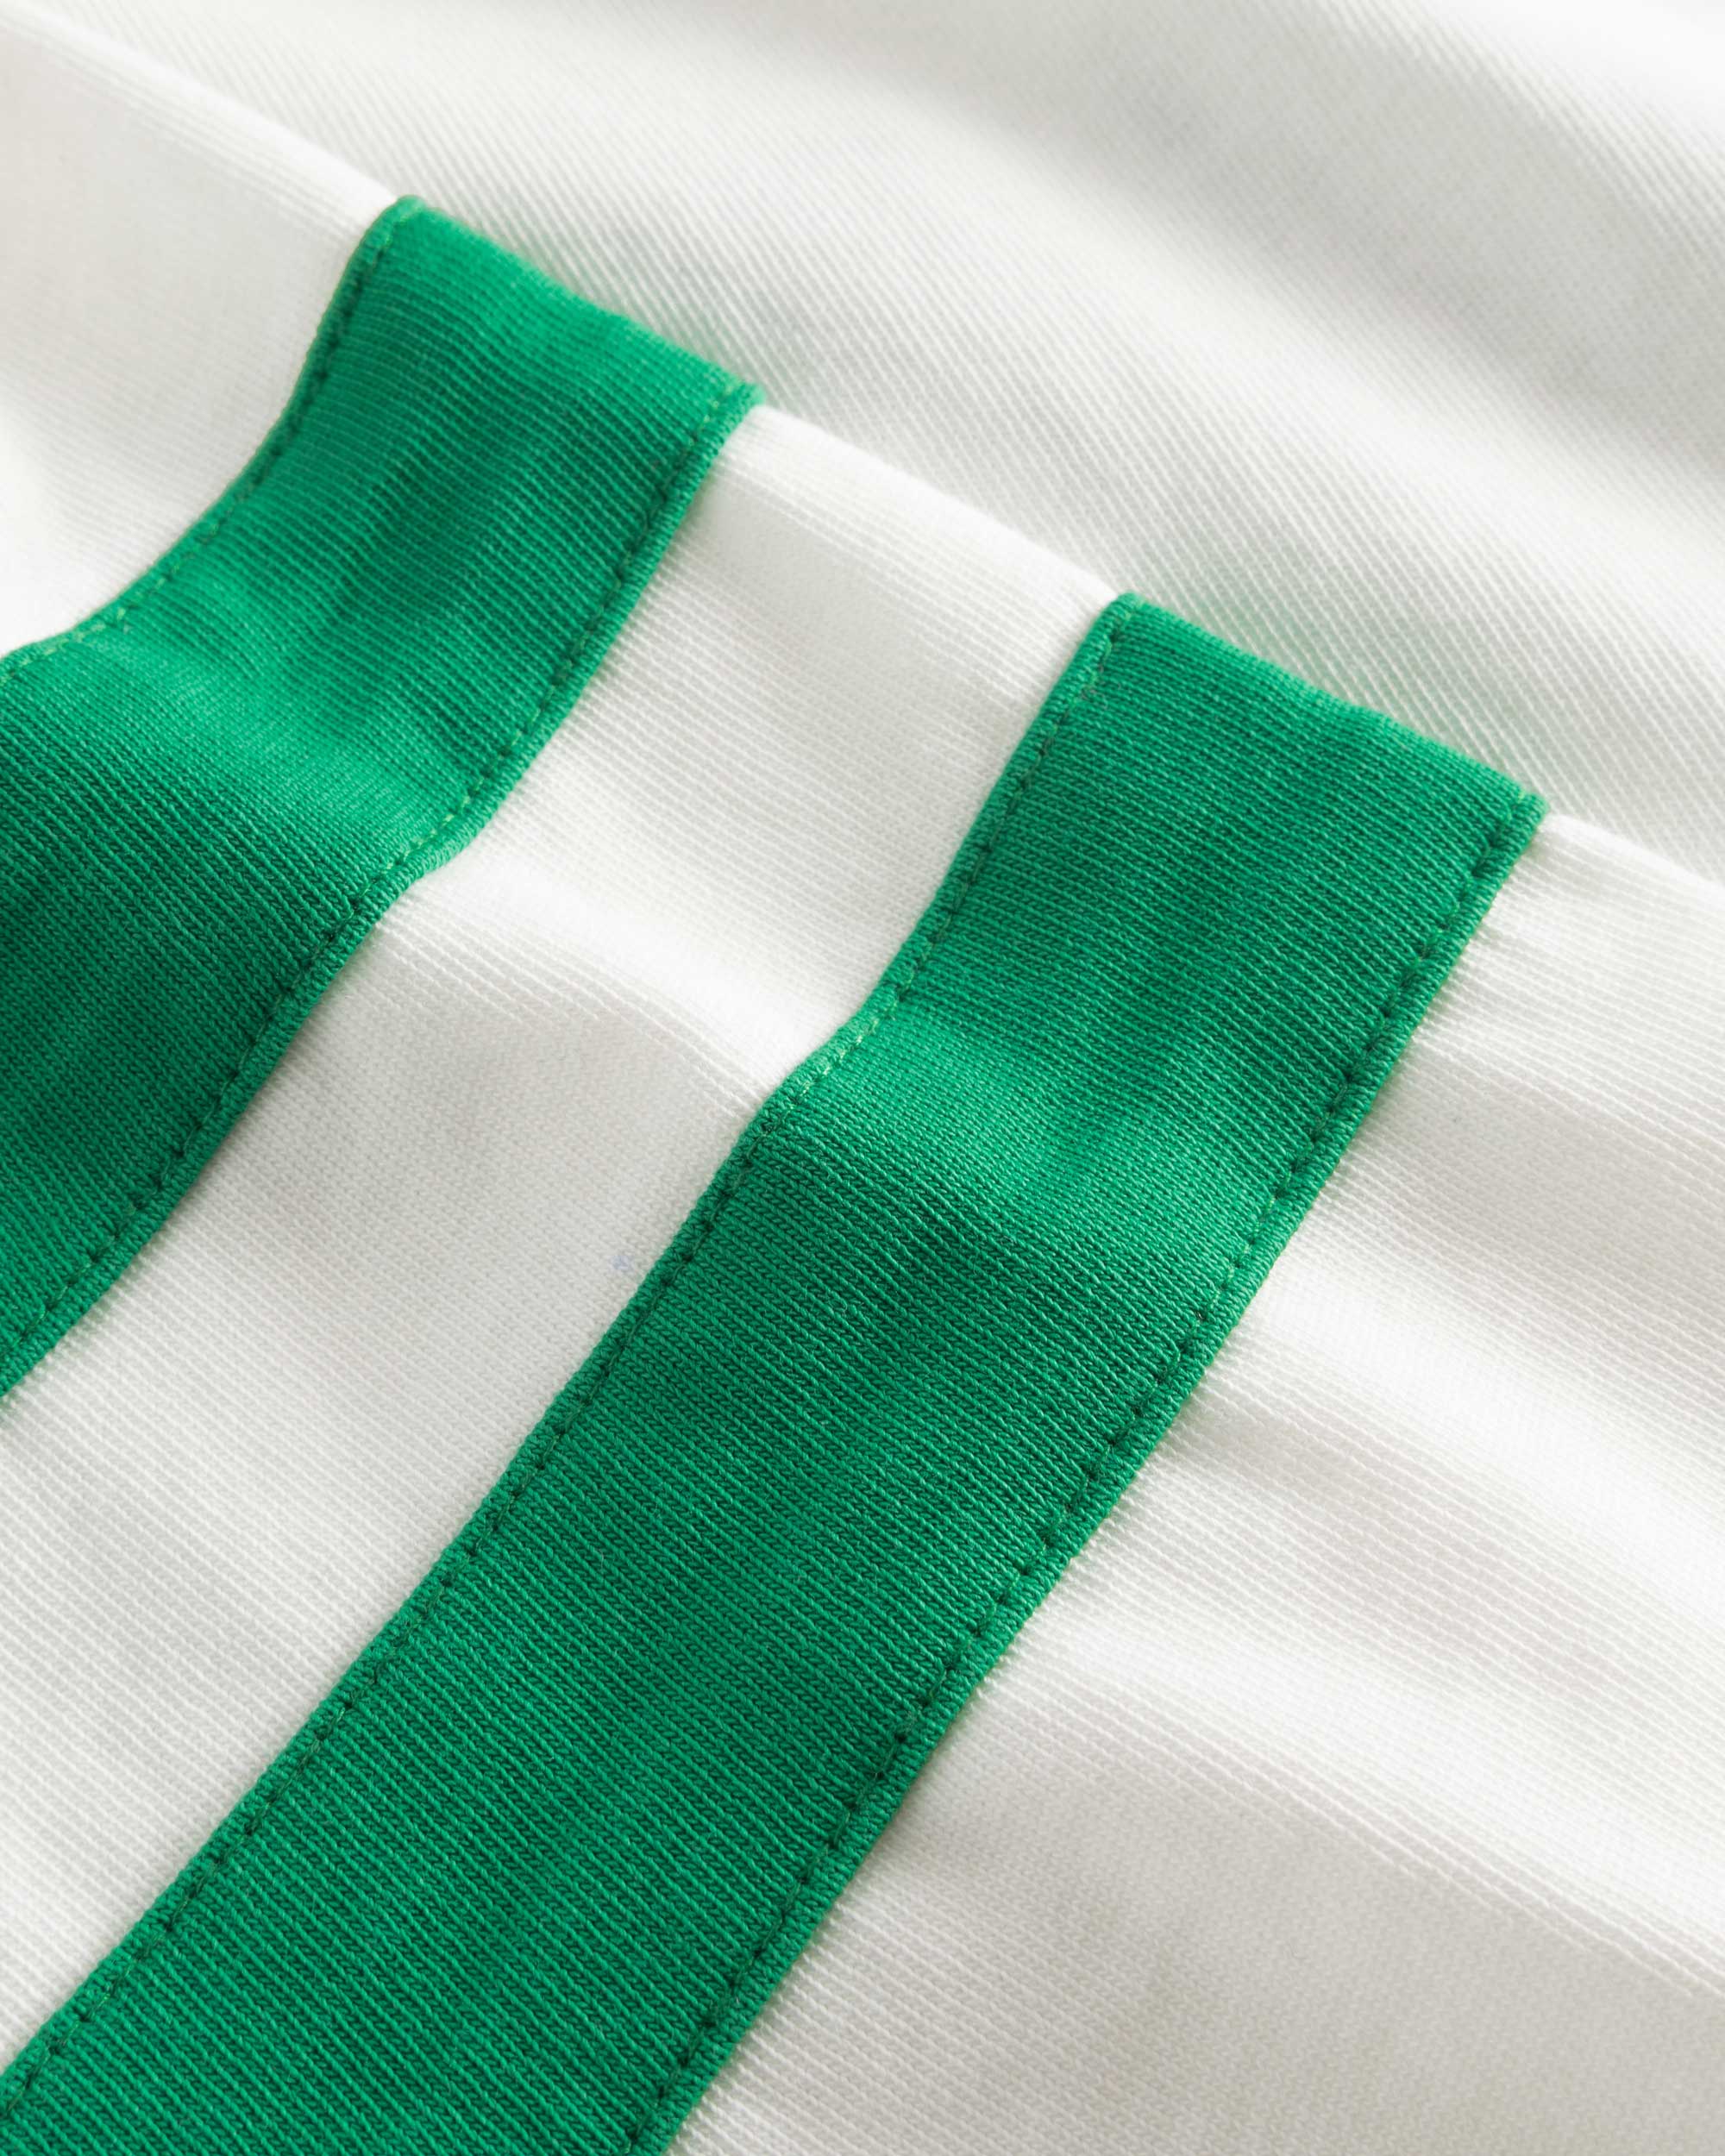 Close-up of  stitching on white/green T-shirt